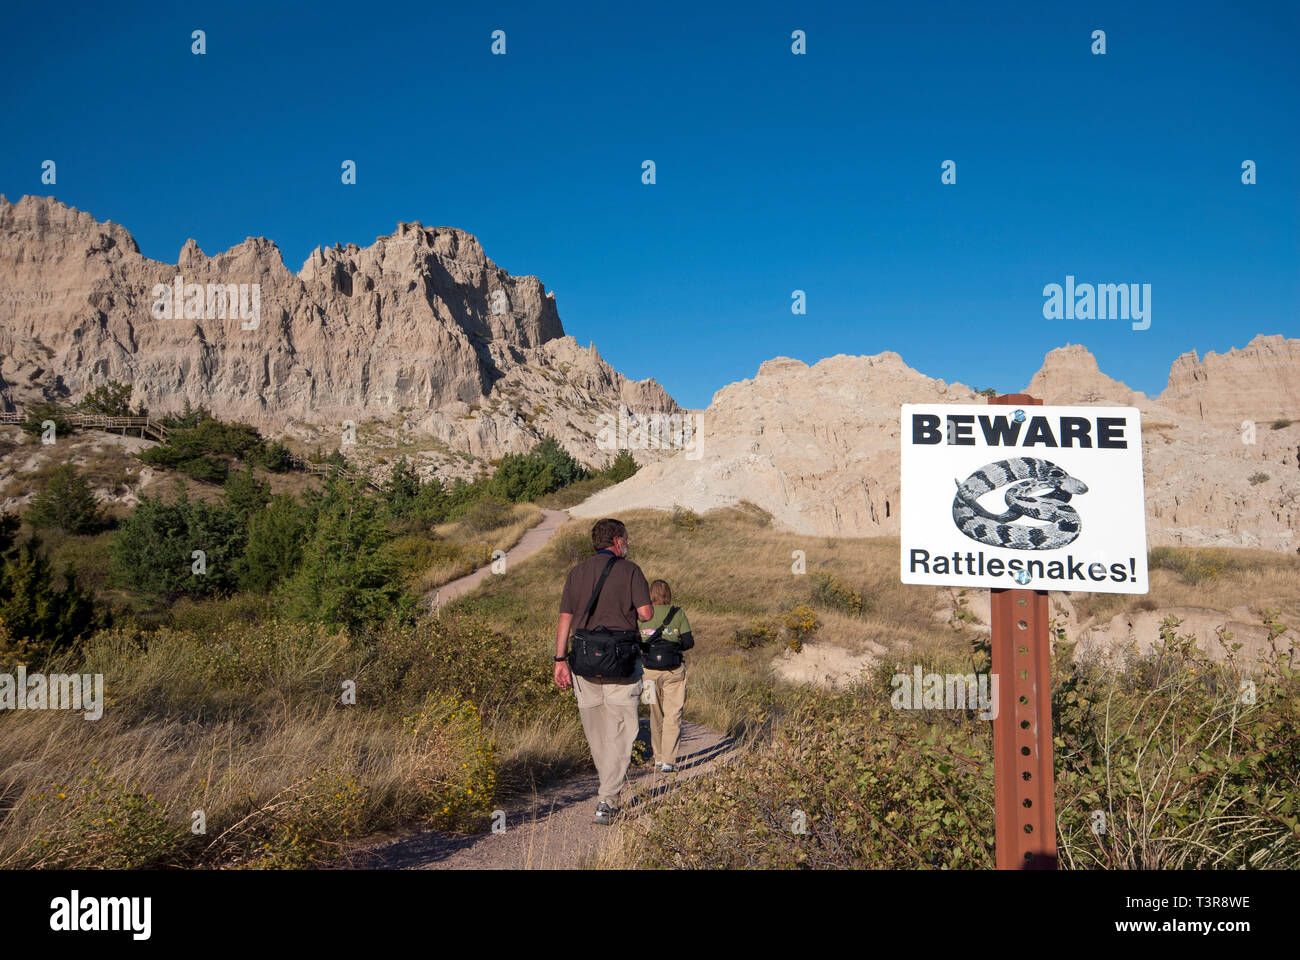 Beware rattlesnakes sign in Badlands National Park, South Dakota, USA Stock Photo